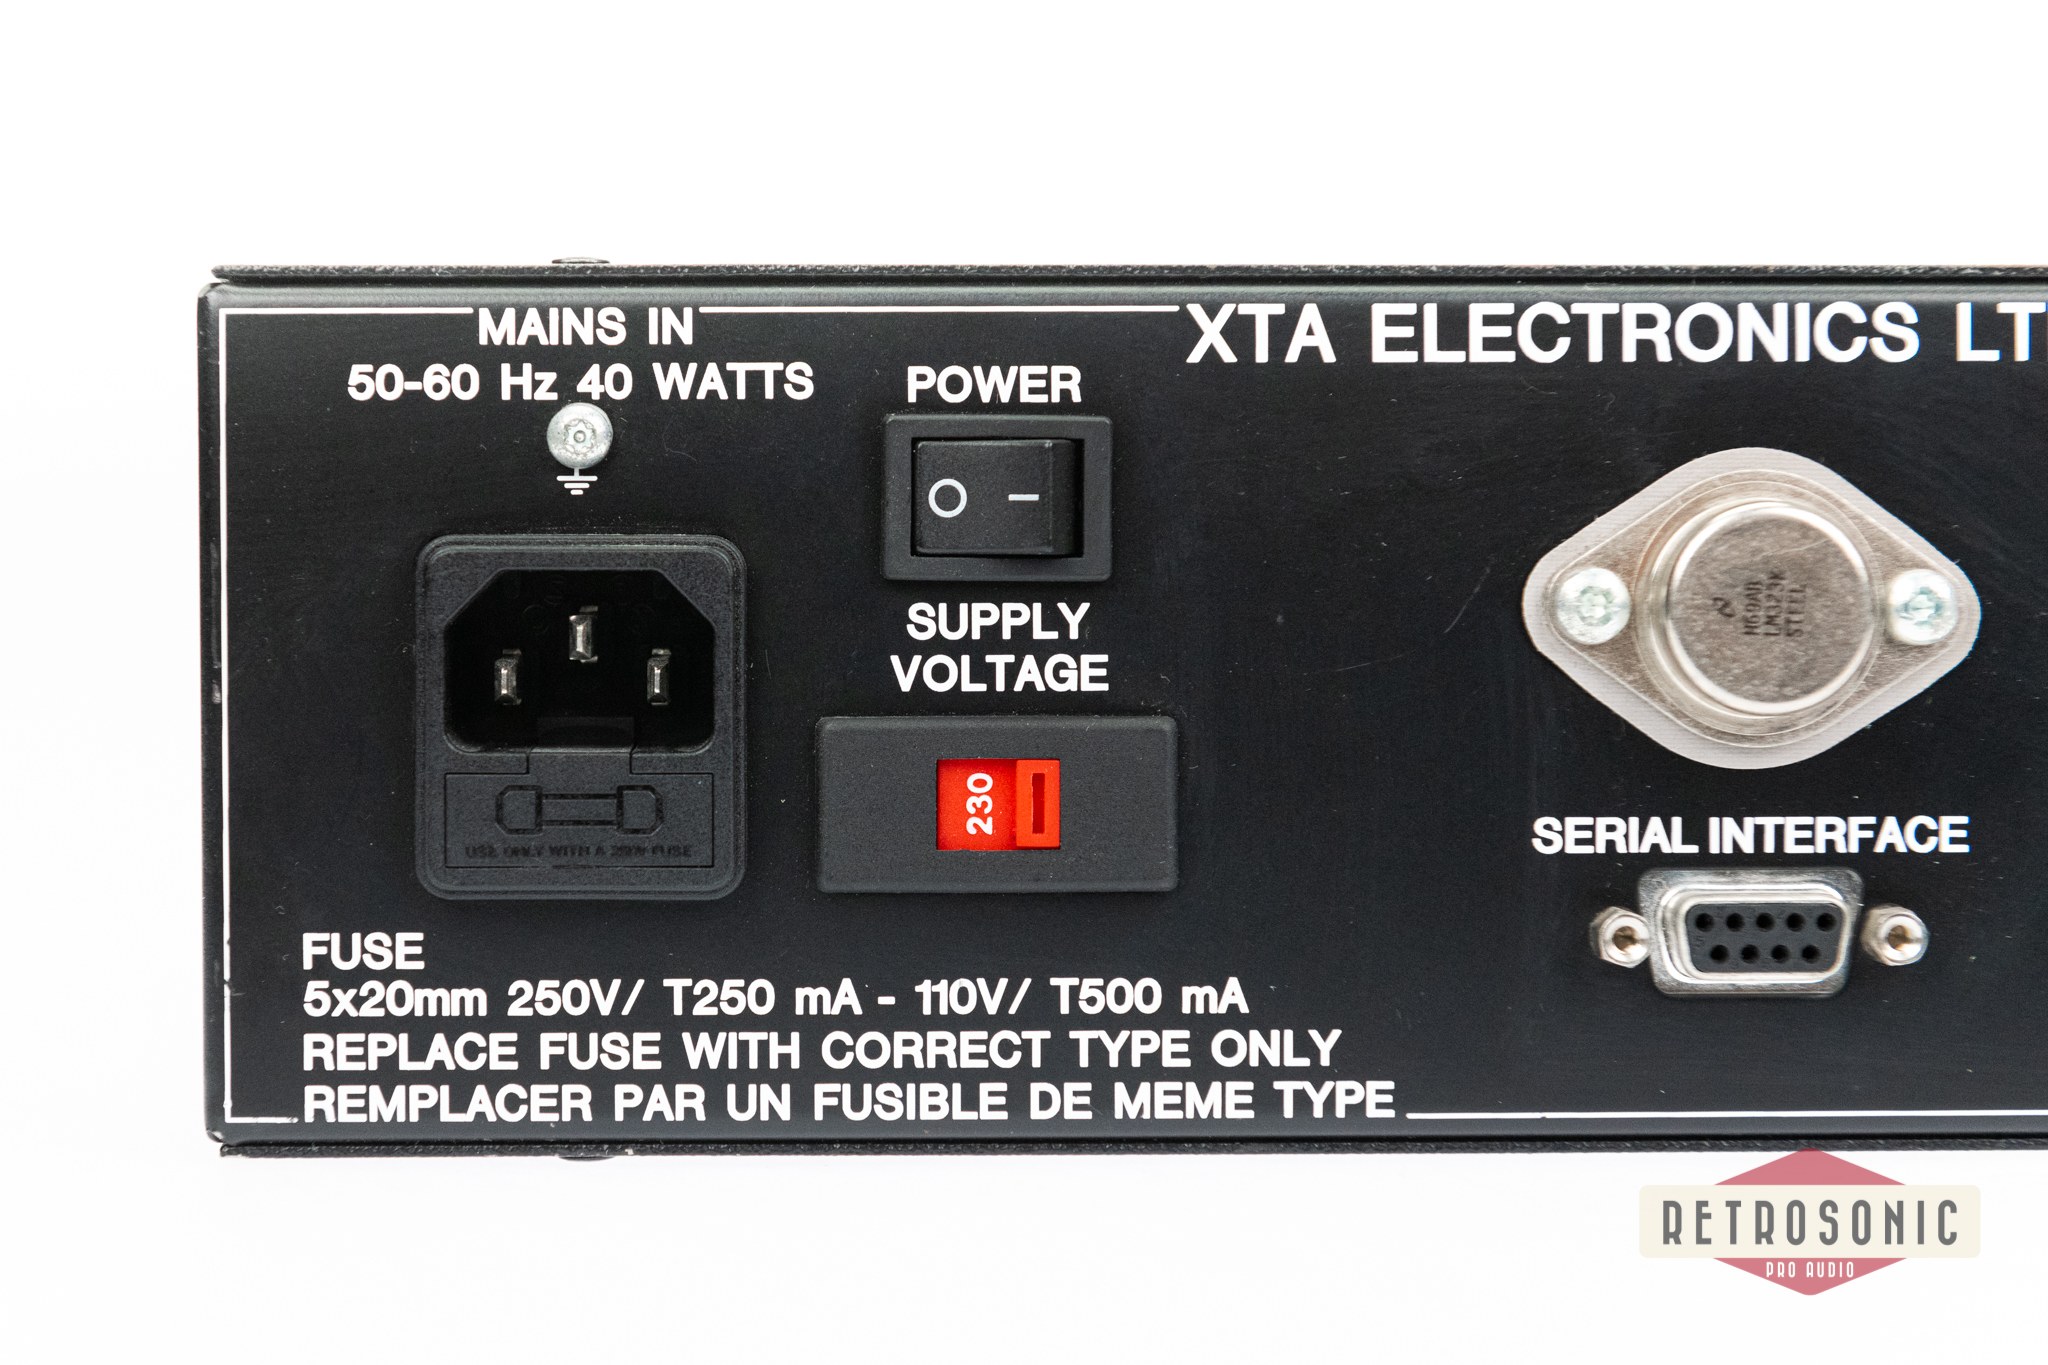 XTA RT-1 Real Time Spectrum Analyser